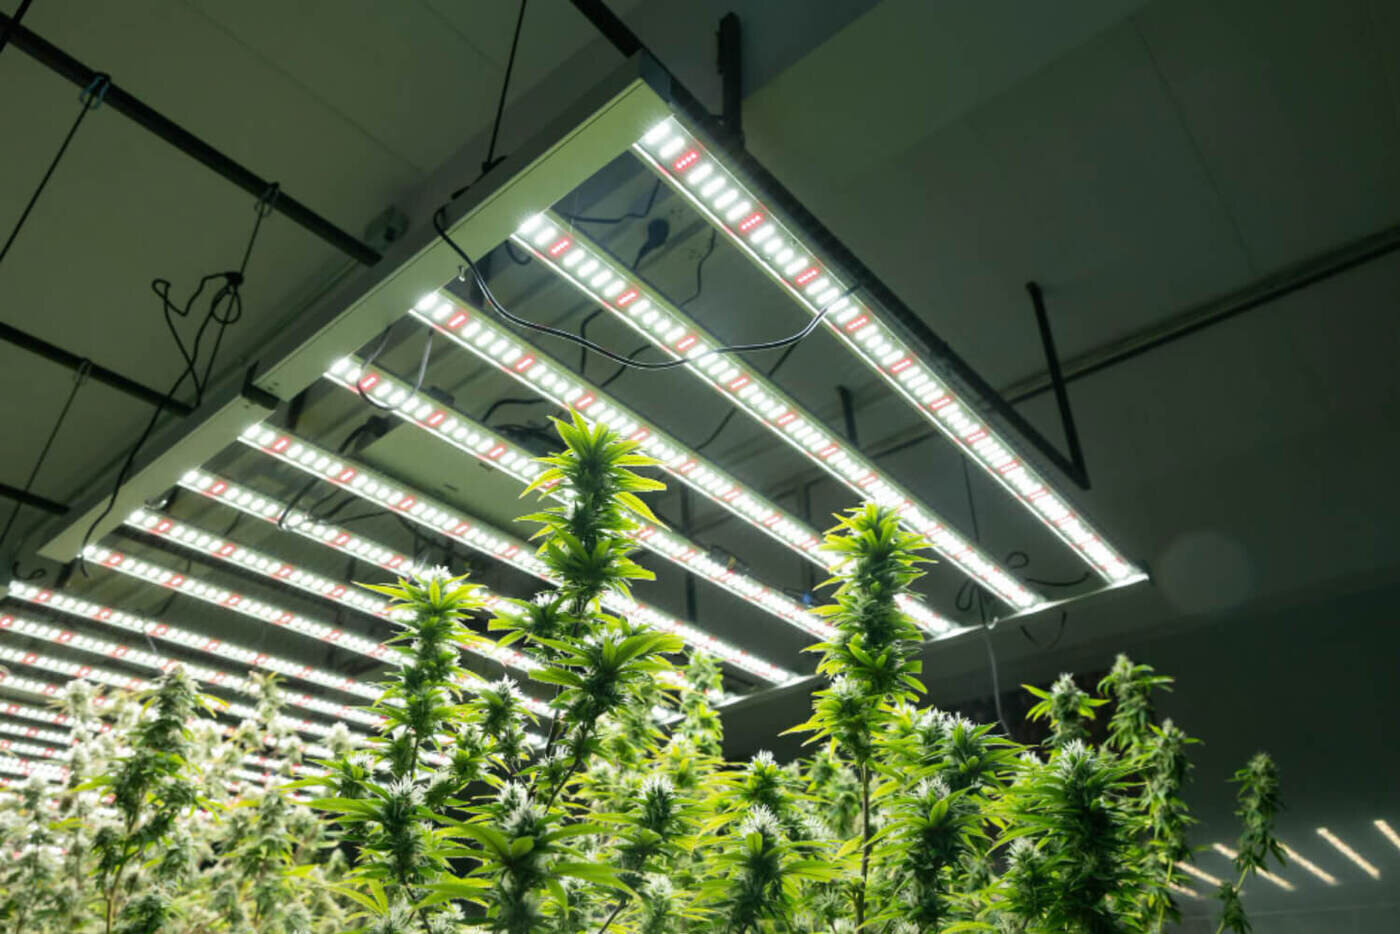 indoor cannabis growing operation